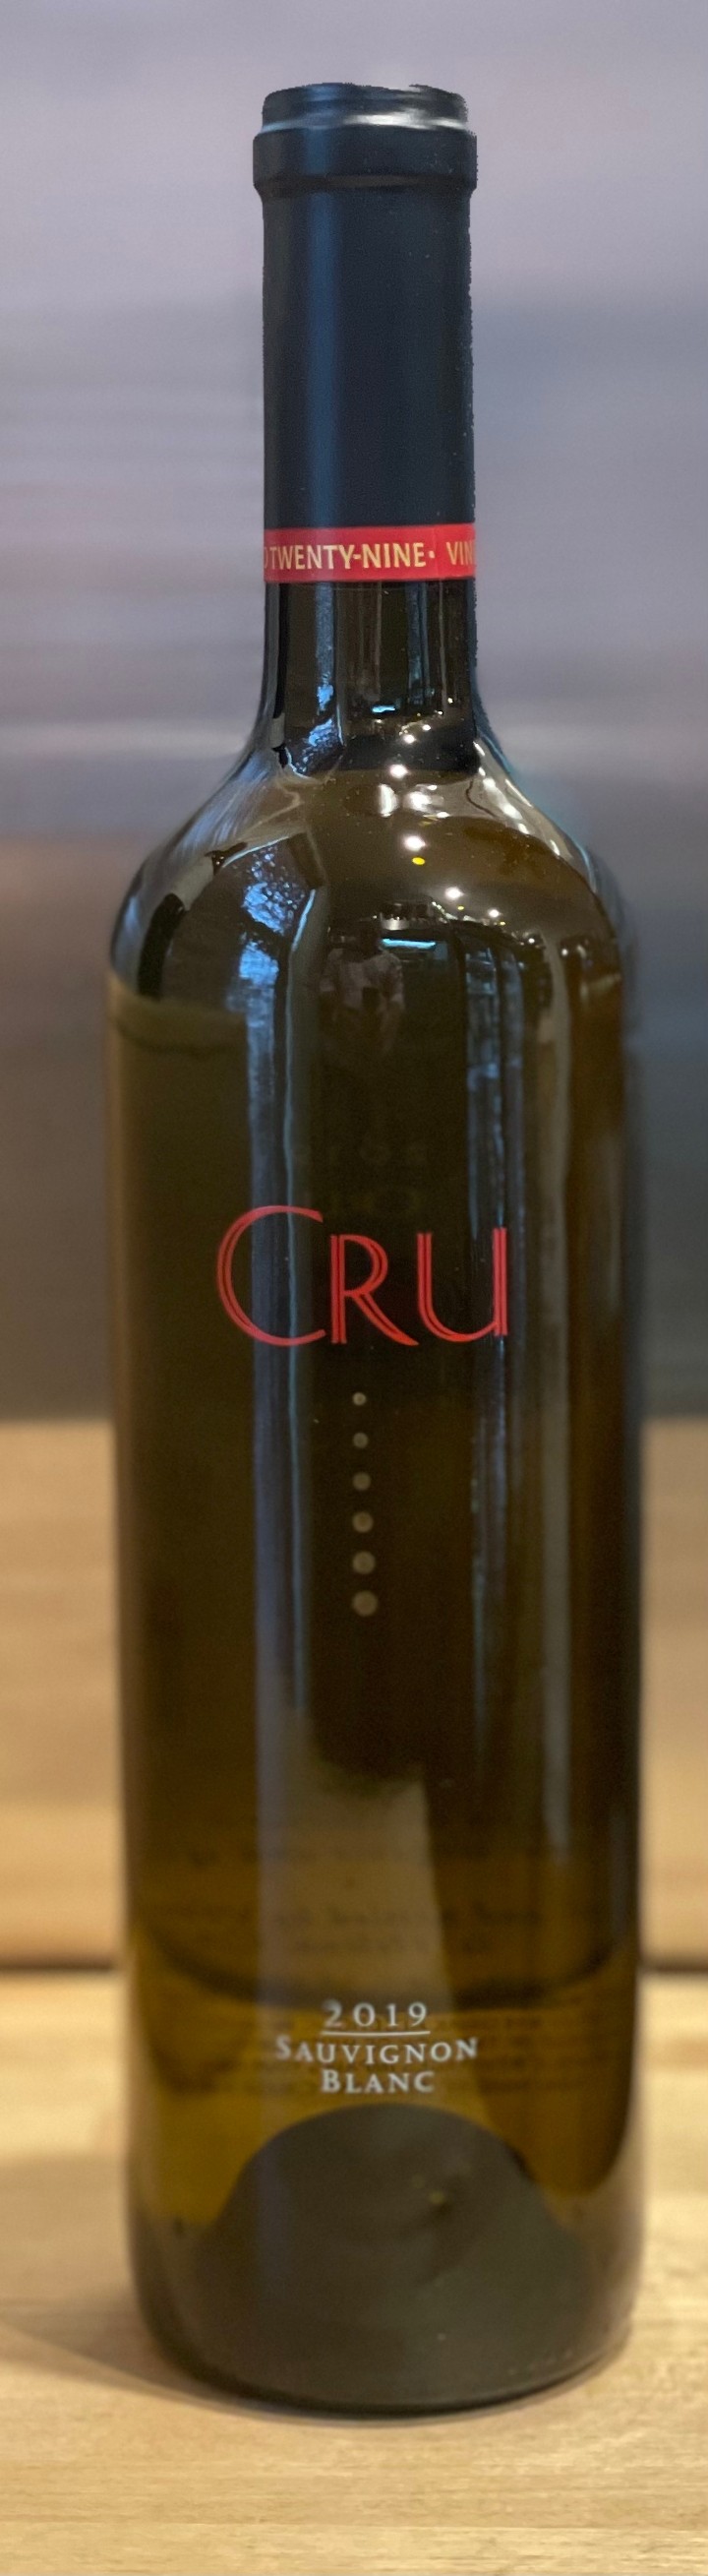 Vineyard 29 'CRU' Sauv Blanc